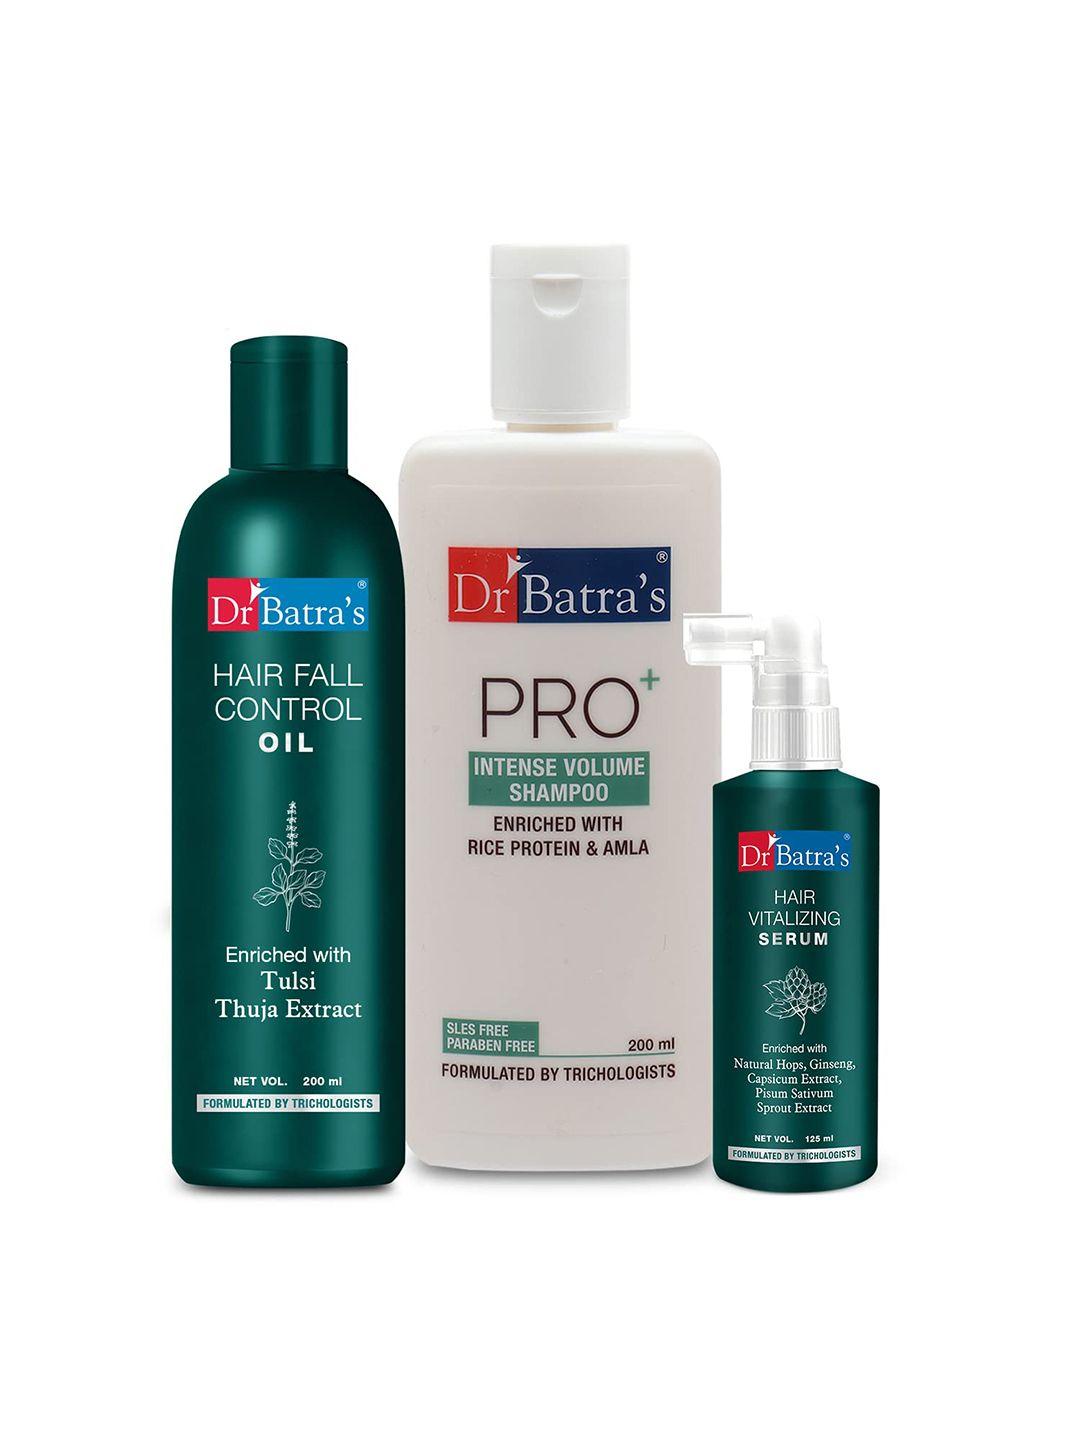 dr batras hair vitalizing serum 125ml + pro+ intense volume shampoo 200ml + hair oil 200ml